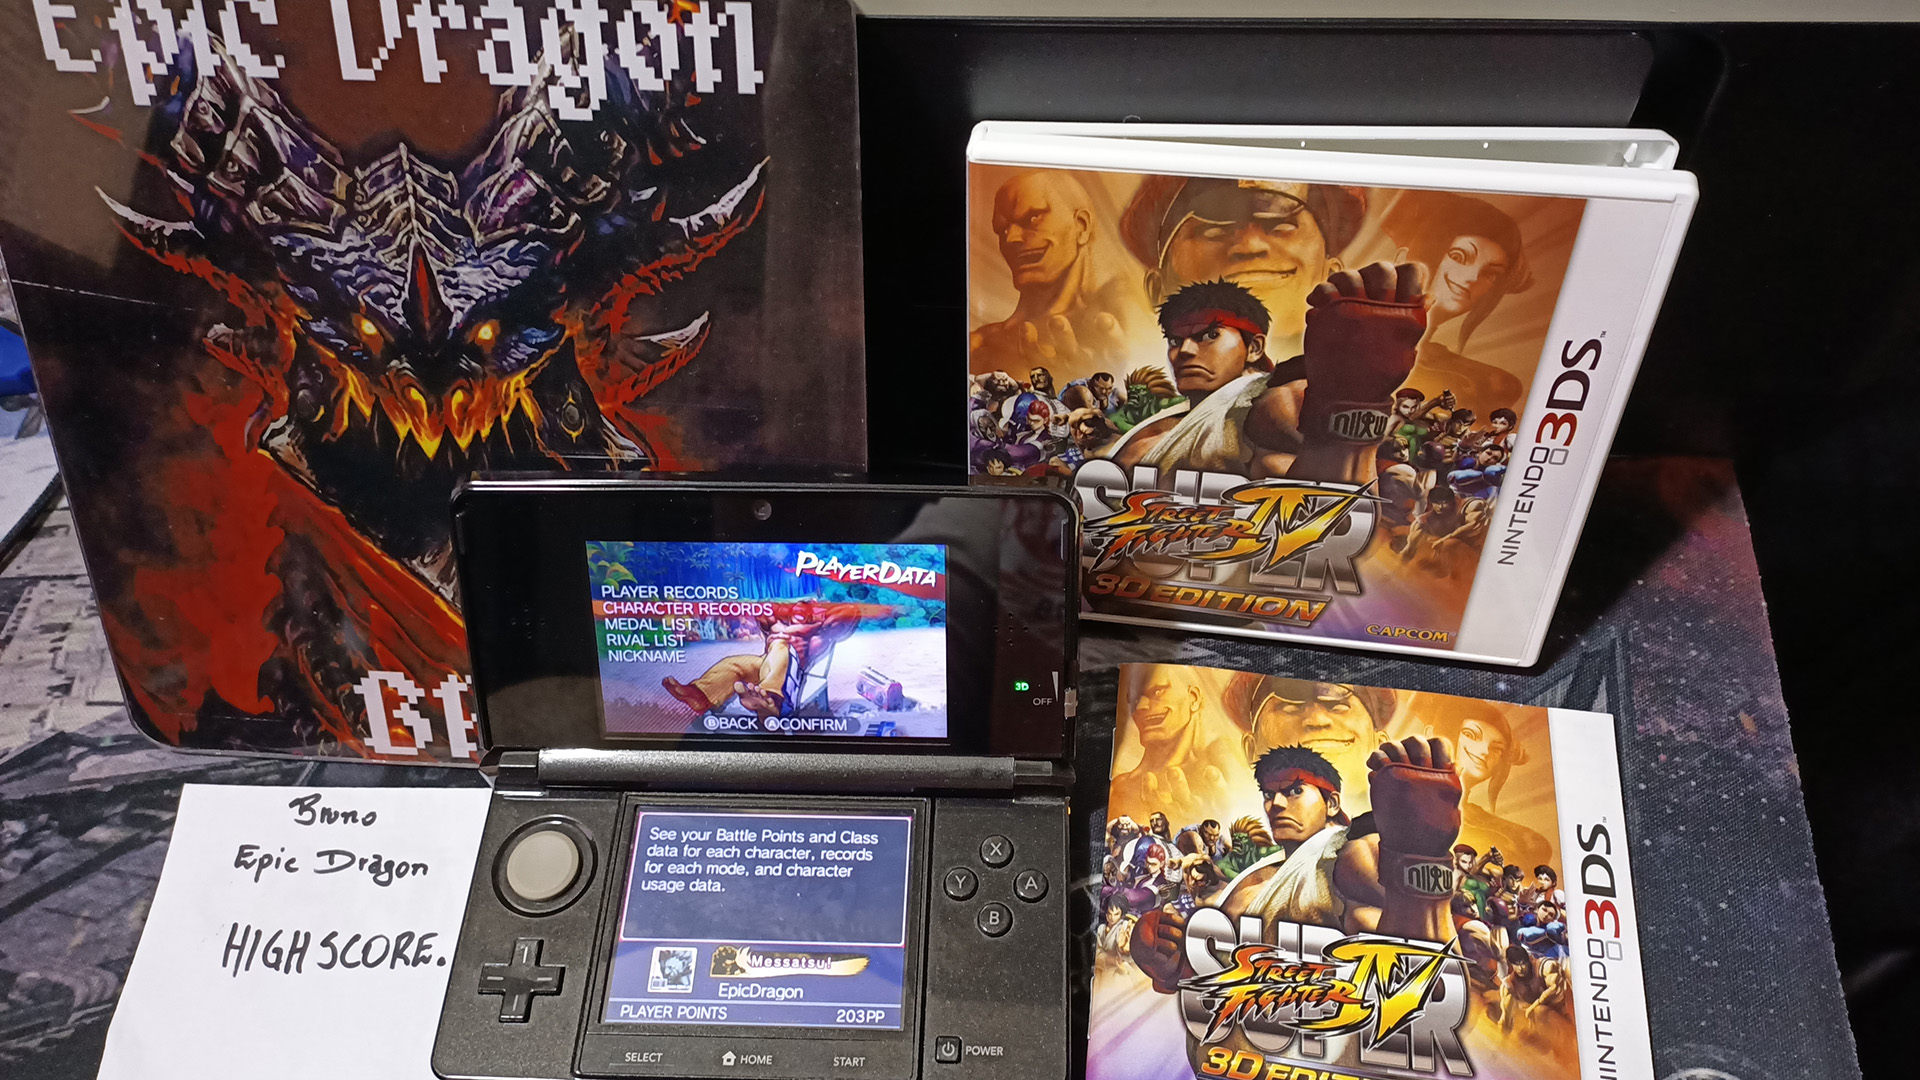 EpicDragon: Super Street Fighter IV 3D Edition: Challenge: Barrel Buster: Rufus (Nintendo 3DS) 81,000 points on 2022-08-17 21:07:45